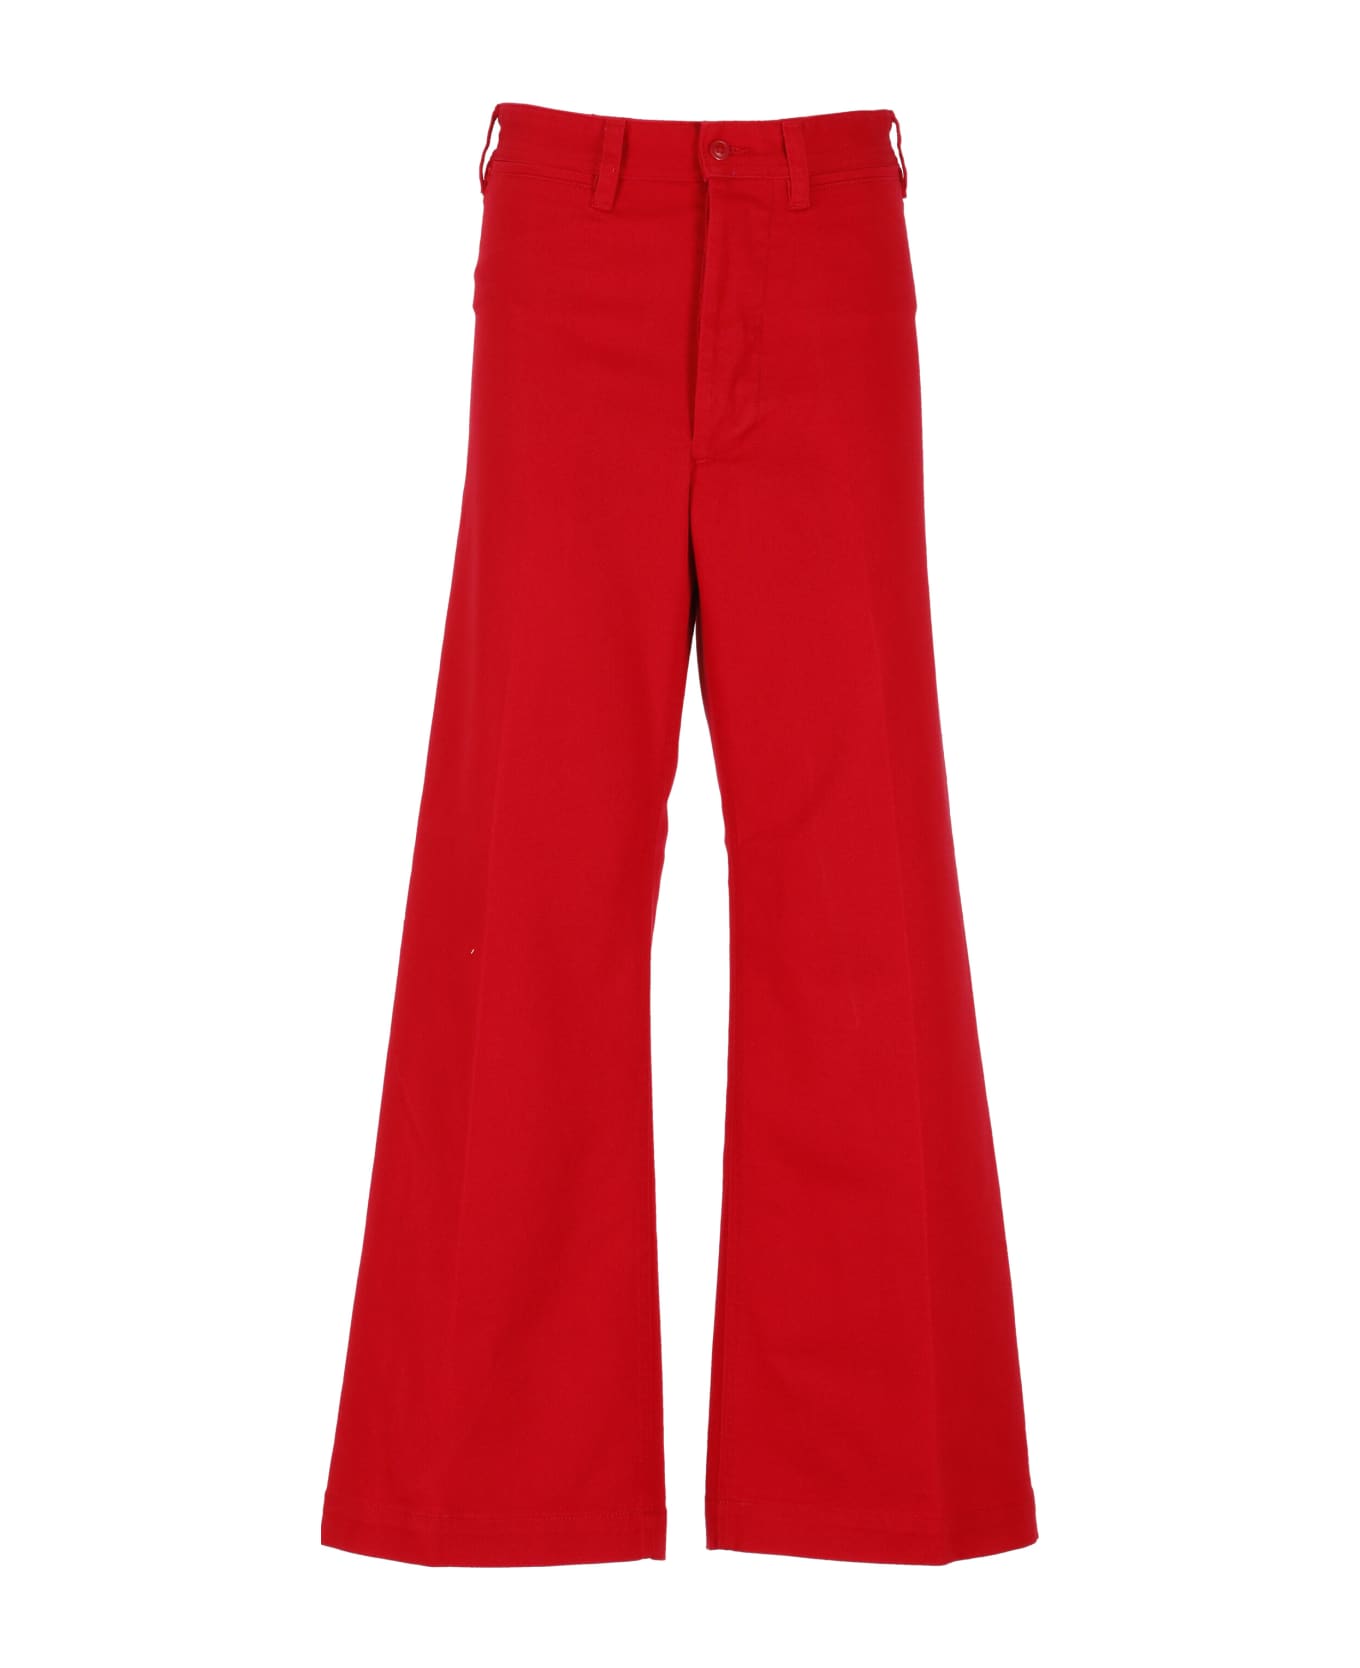 Ralph Lauren Flared Pants - Red ボトムス